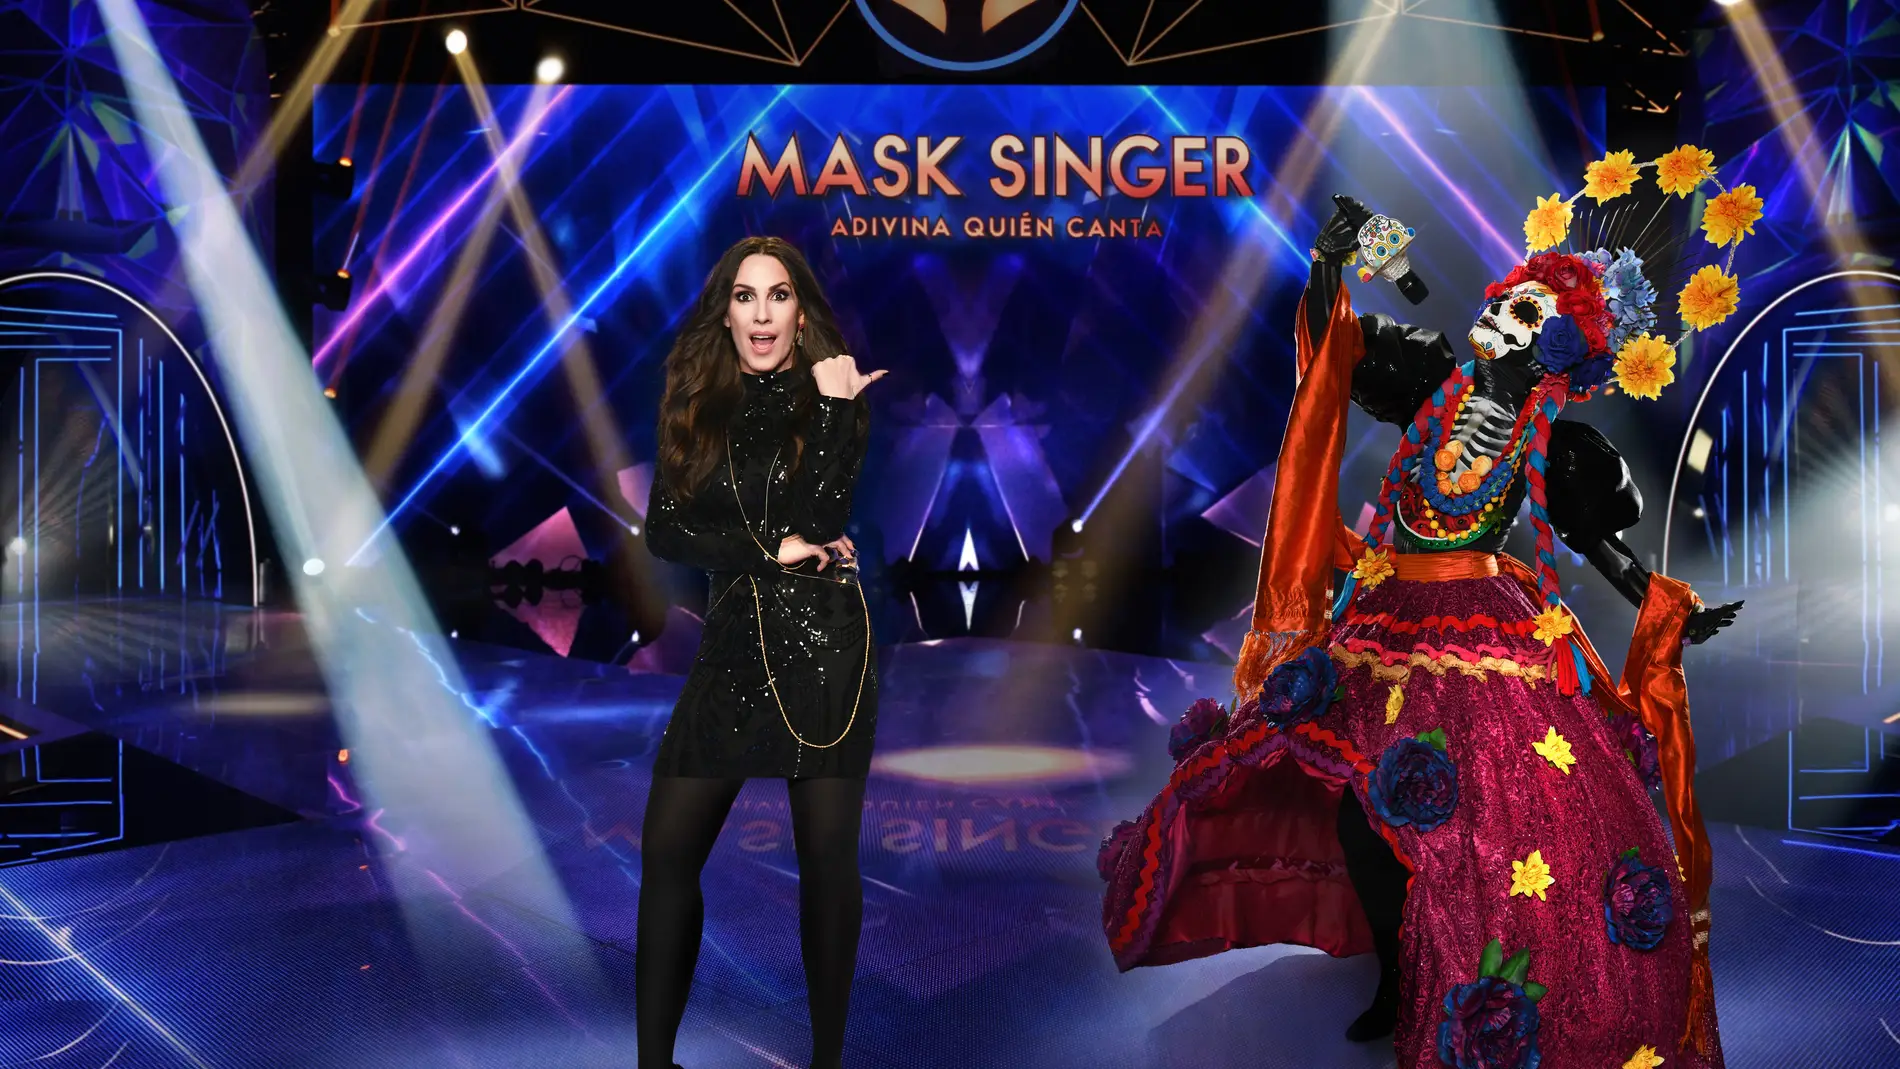 Malú, investigadora de 'Mask Singer: adivina quién canta' title=